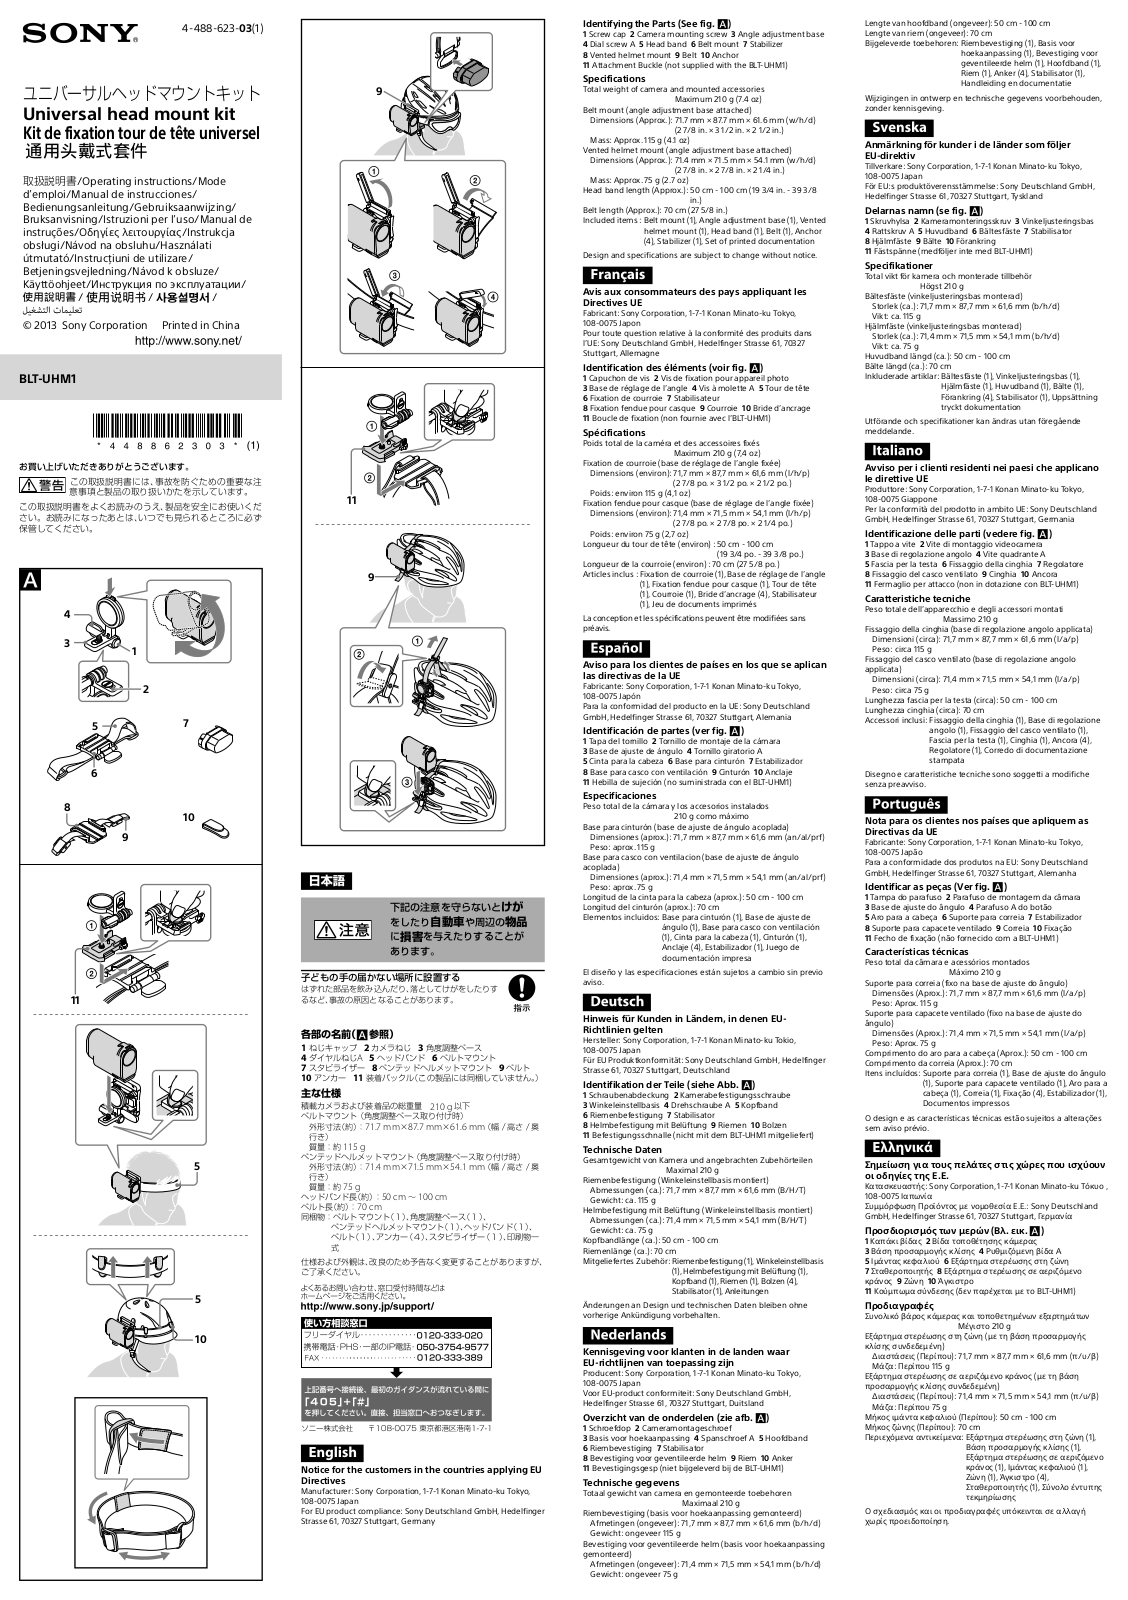 Sony BLT-UHM1-C User Manual